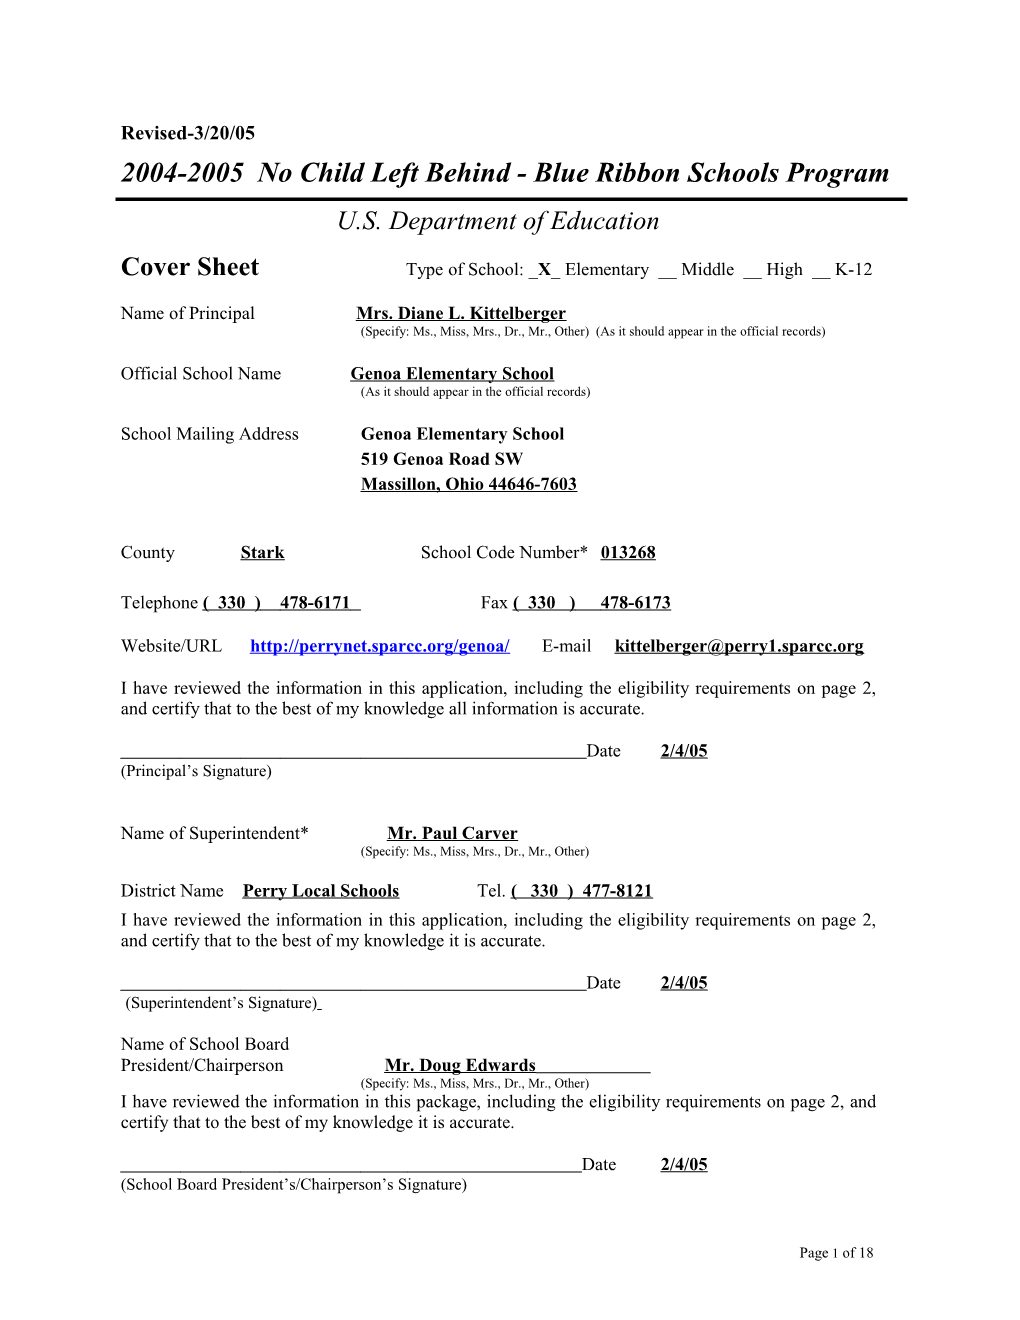 Genoa Elementary School Application: 2004-2005, No Child Left Behind - Blue Ribbon Schools